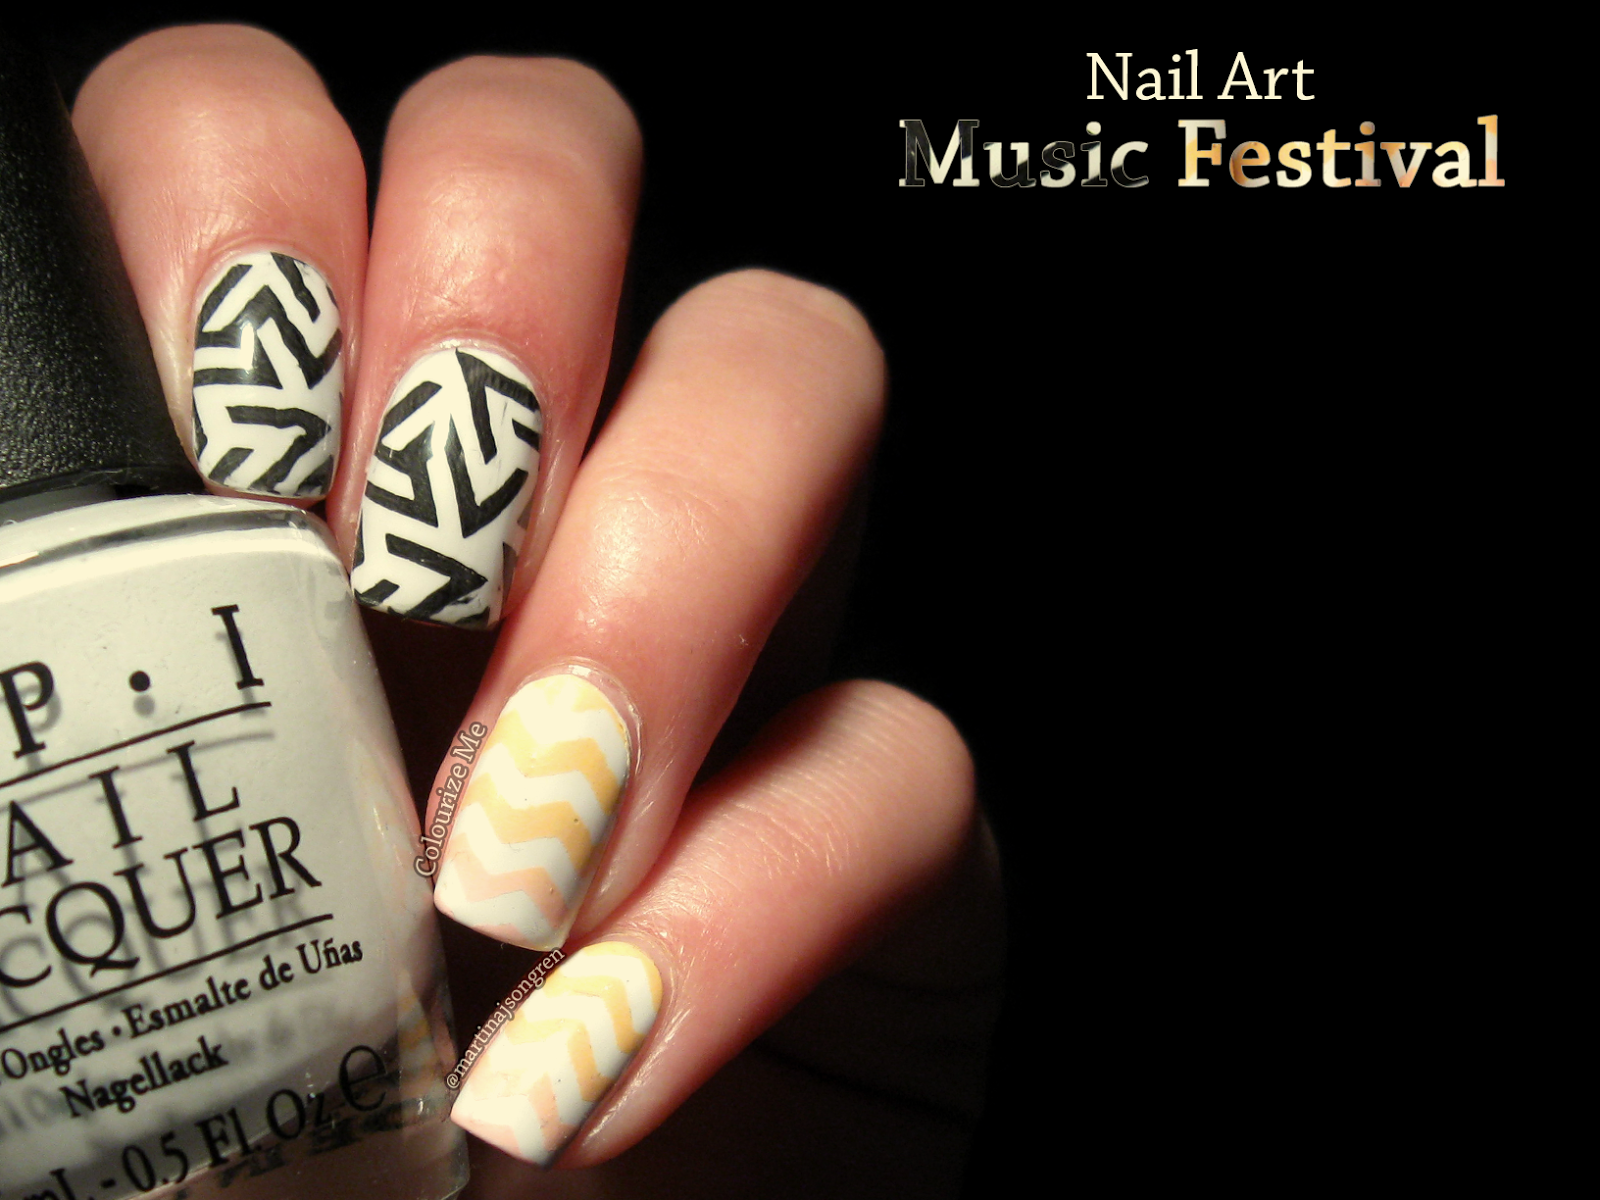 Festival Nail Art - wide 2